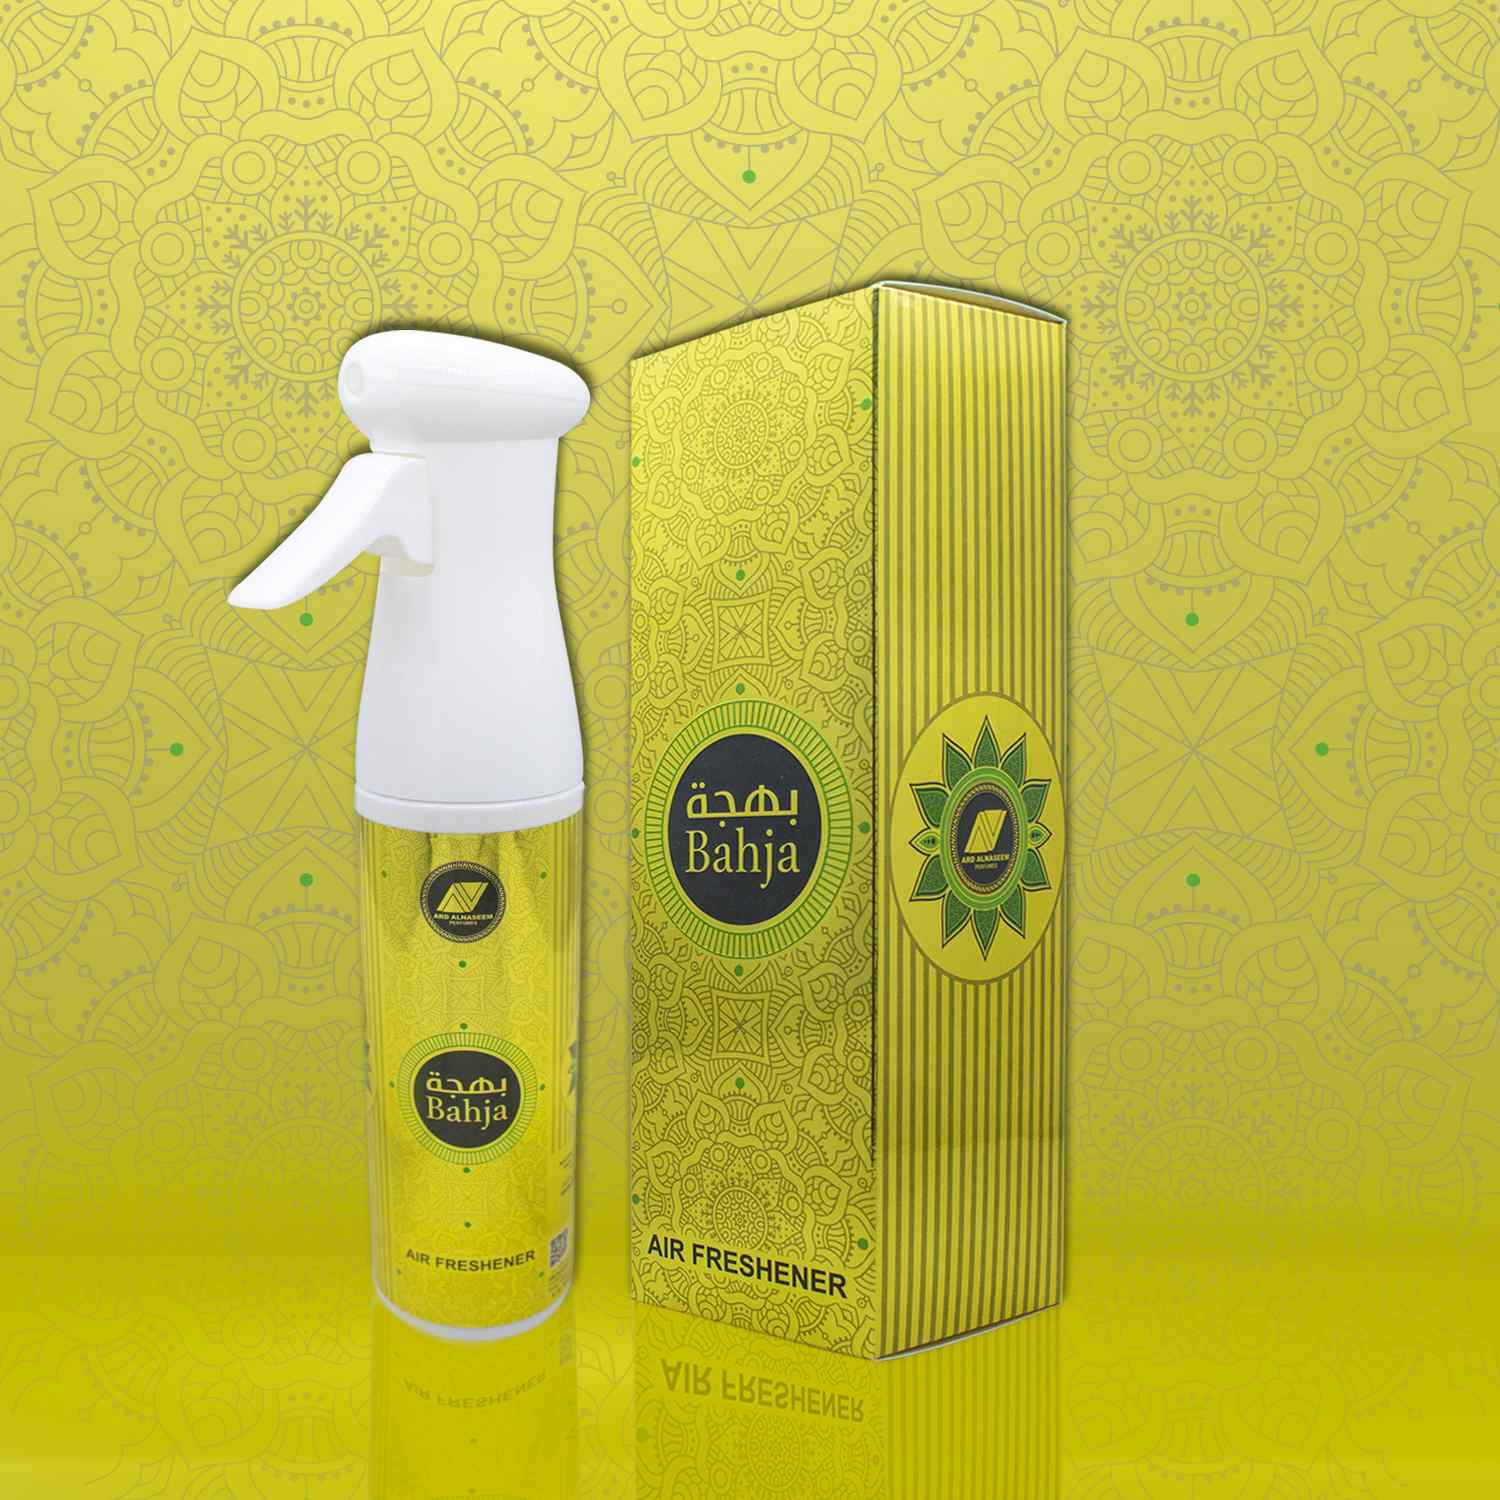 Bahja Air Freshener by ARD perfumes